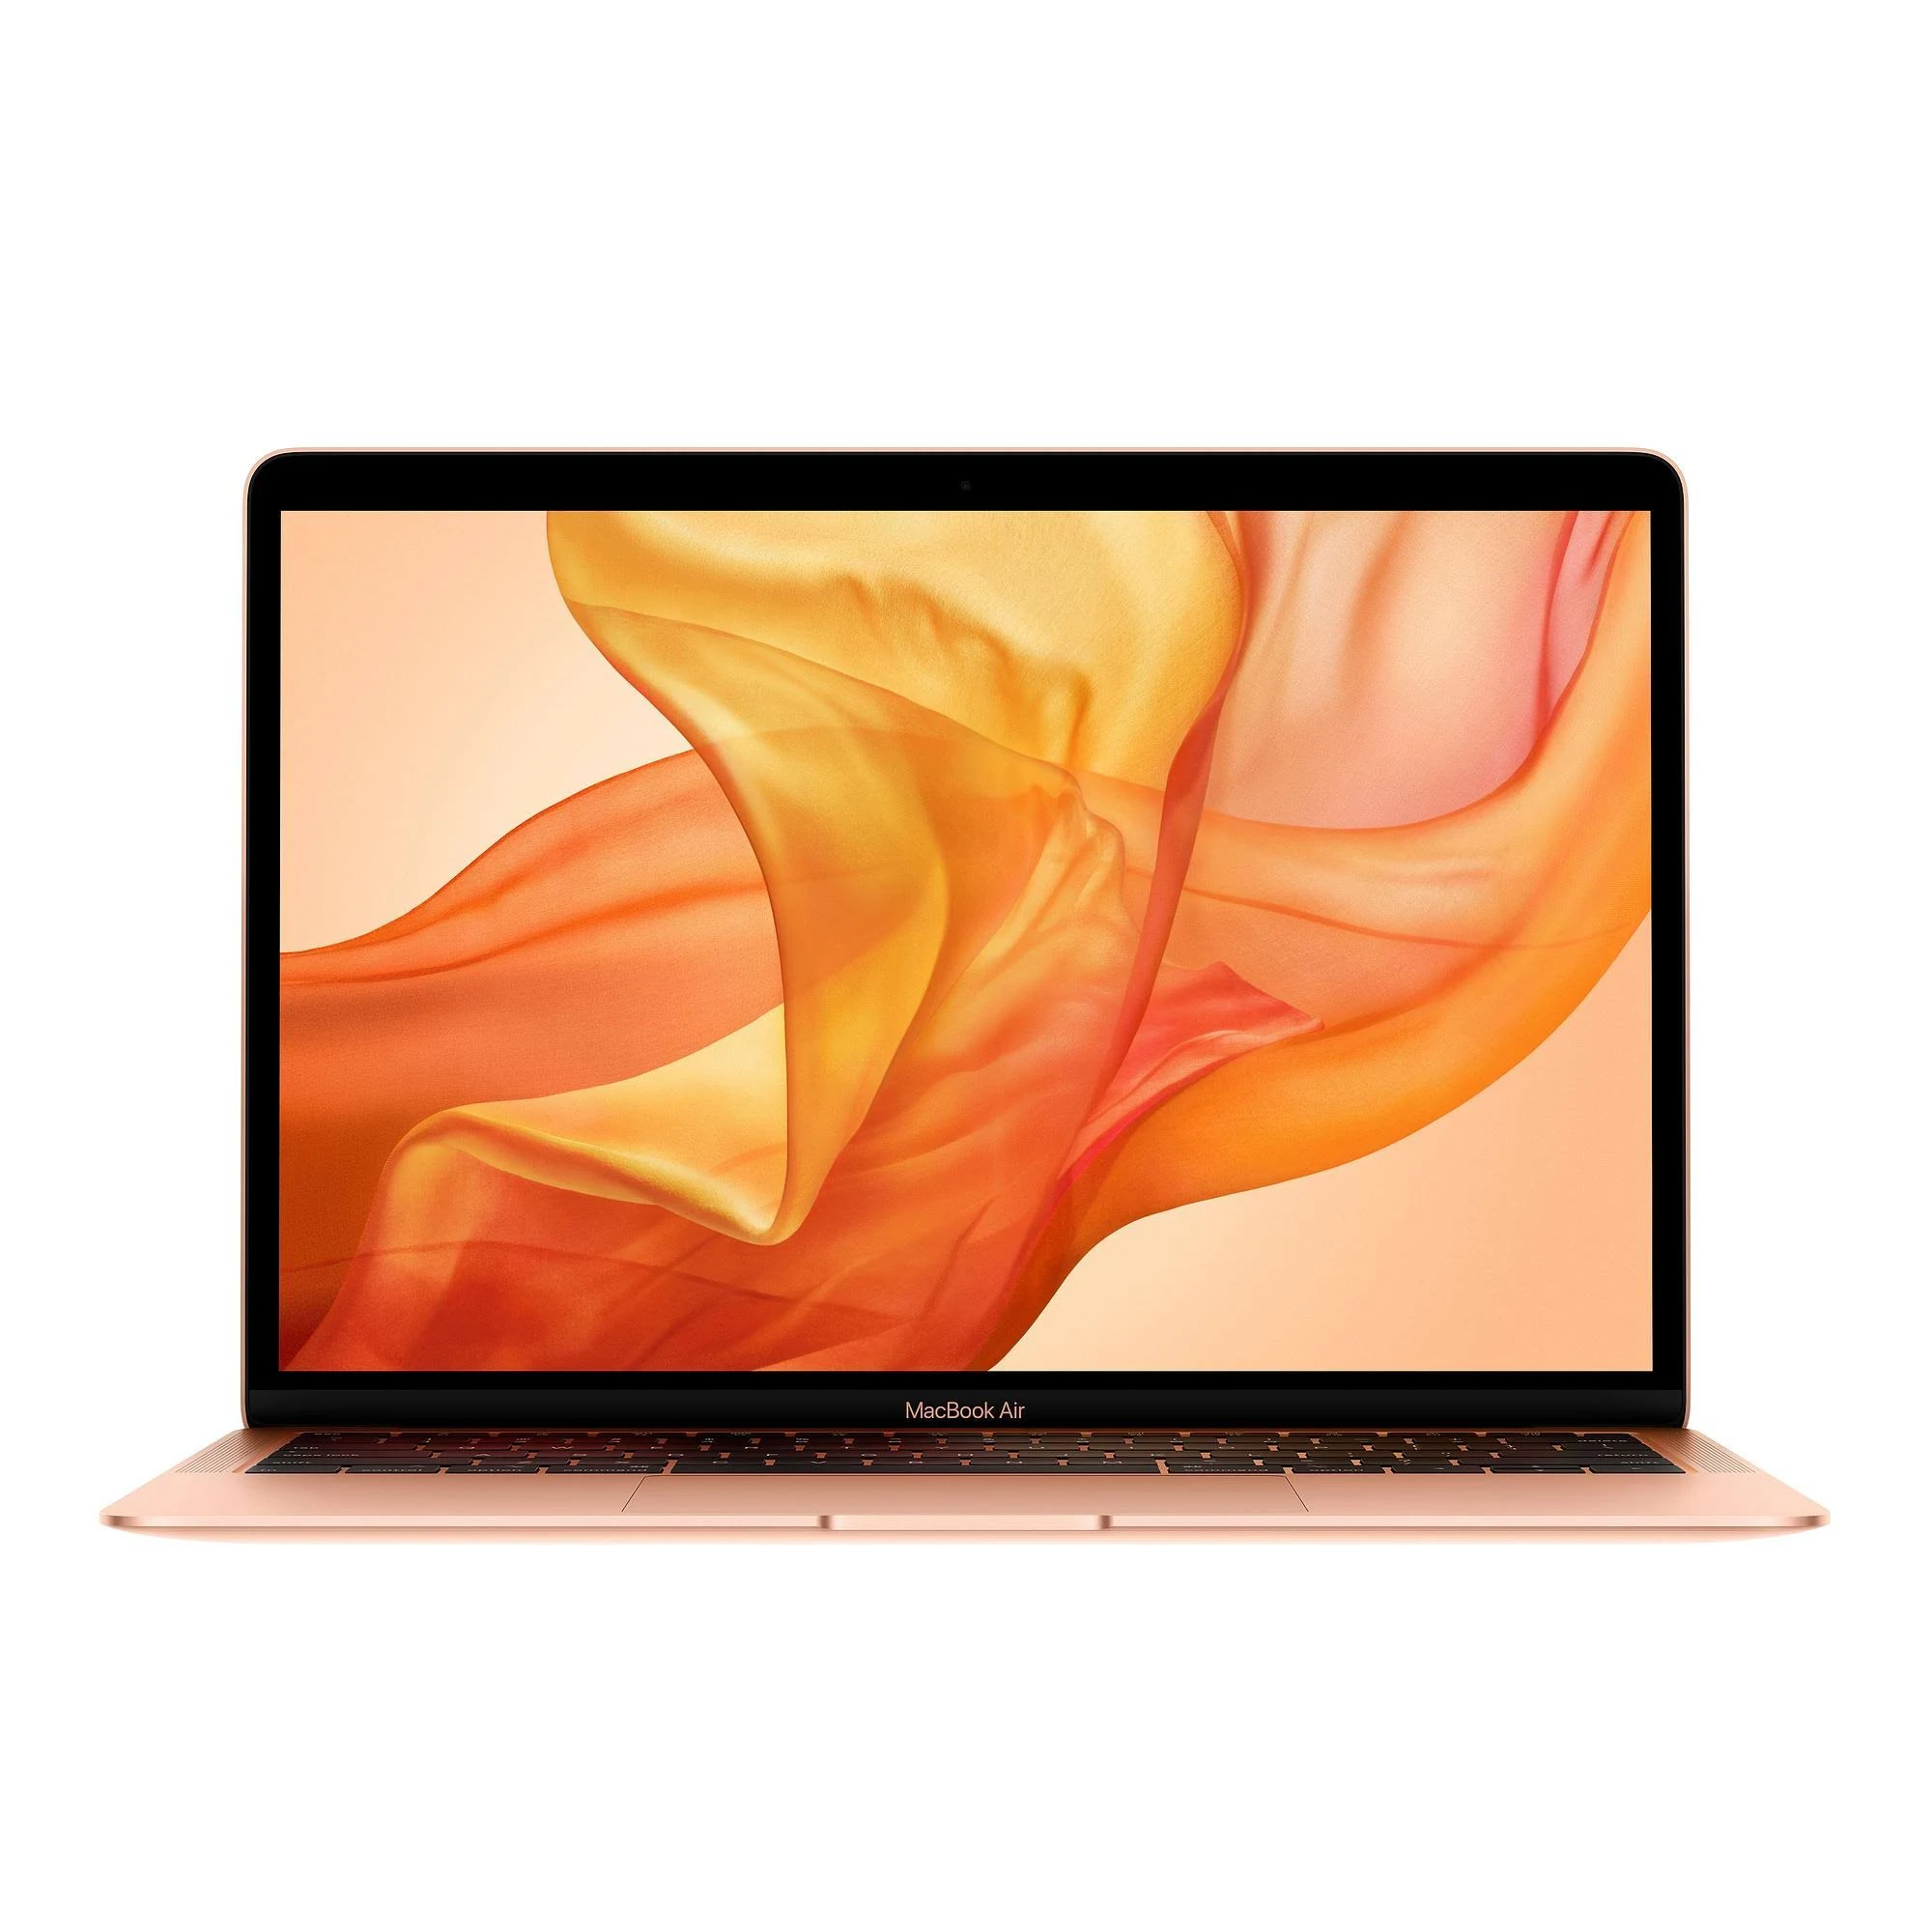 MacBook Air 13 inch 2020 Core i3 1.1GHz - 256GB SSD - 8GB Ram 256GB Gold Fair